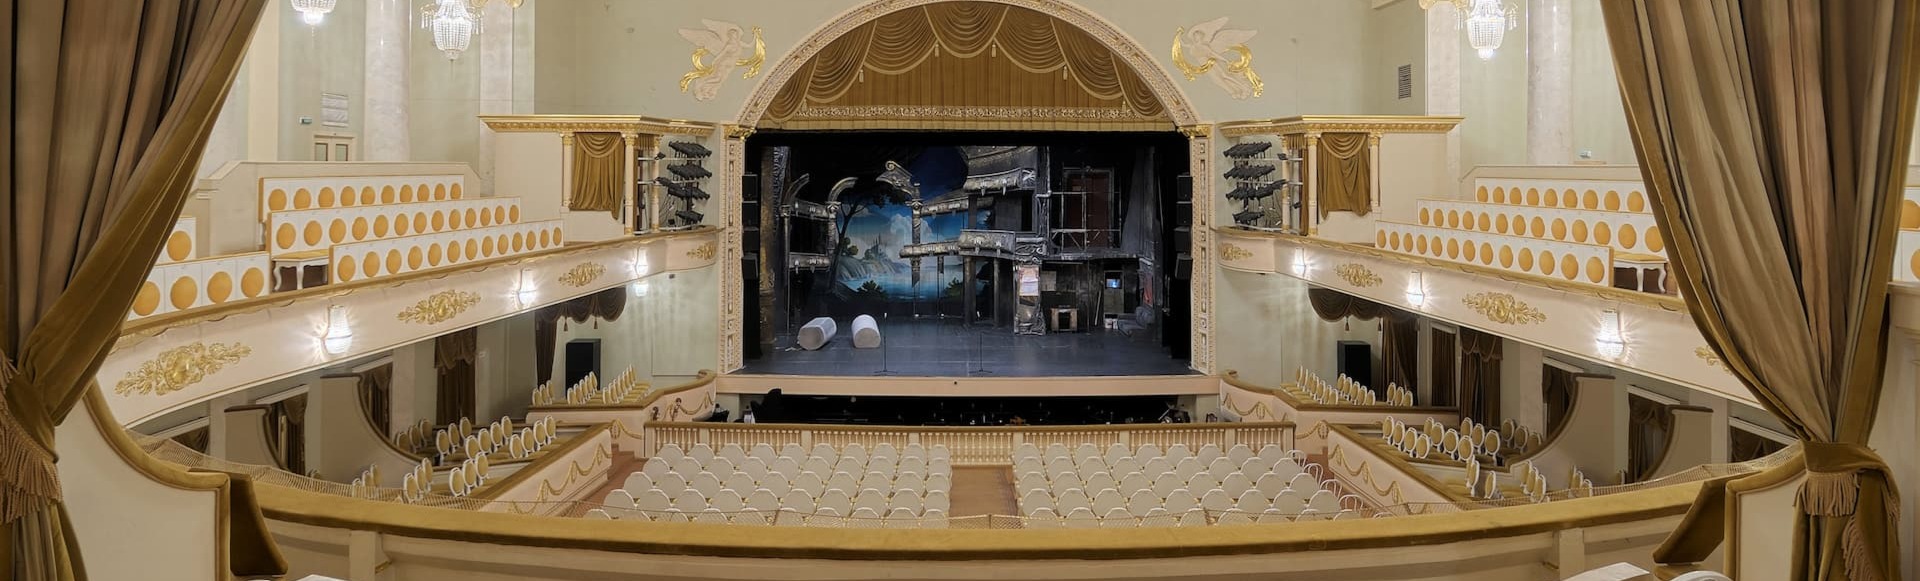 театр акимова санкт петербург зал